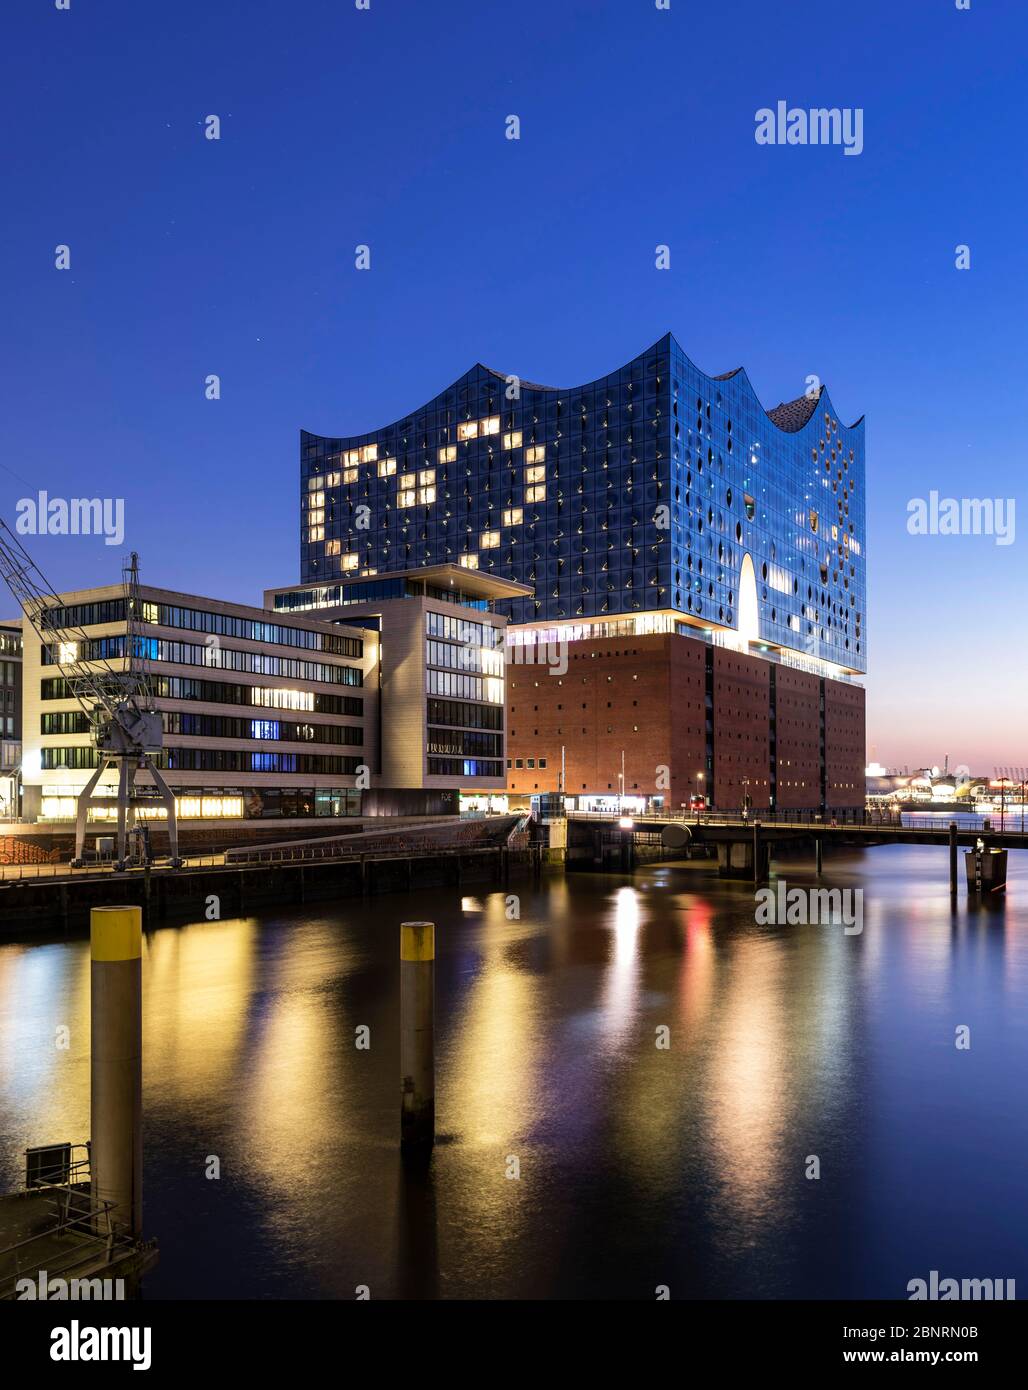 Elbphilharmonie with heart from illuminated hotel rooms as a sign of the Corona crisis, Hafencity, Hamburg, Germany Stock Photo